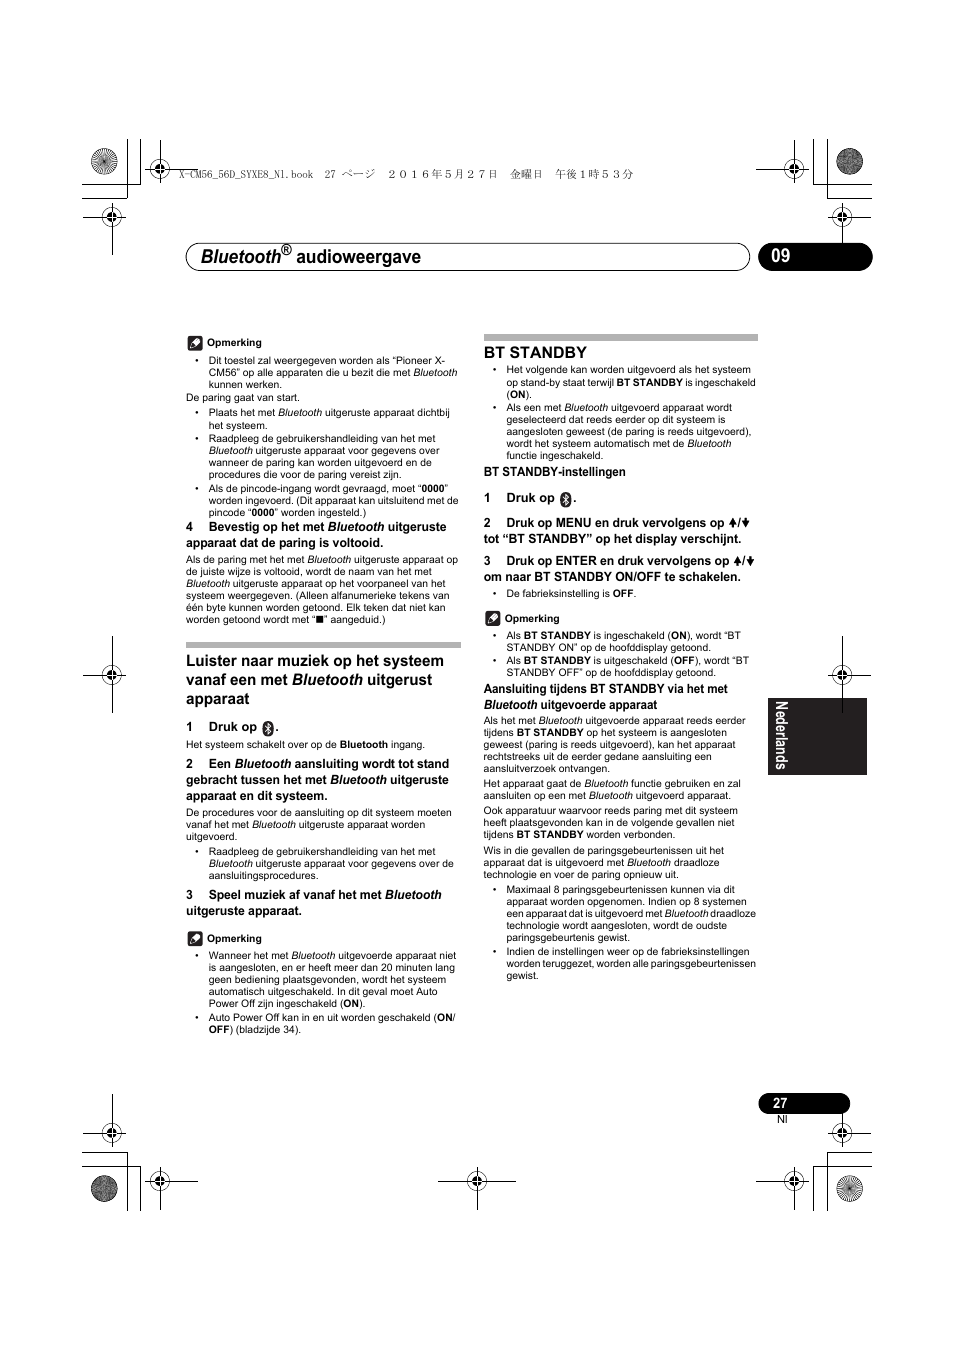 Bluetooth, Audioweergave, Bt standby | Pioneer X-CM56 User Manual | Page 163 / 244